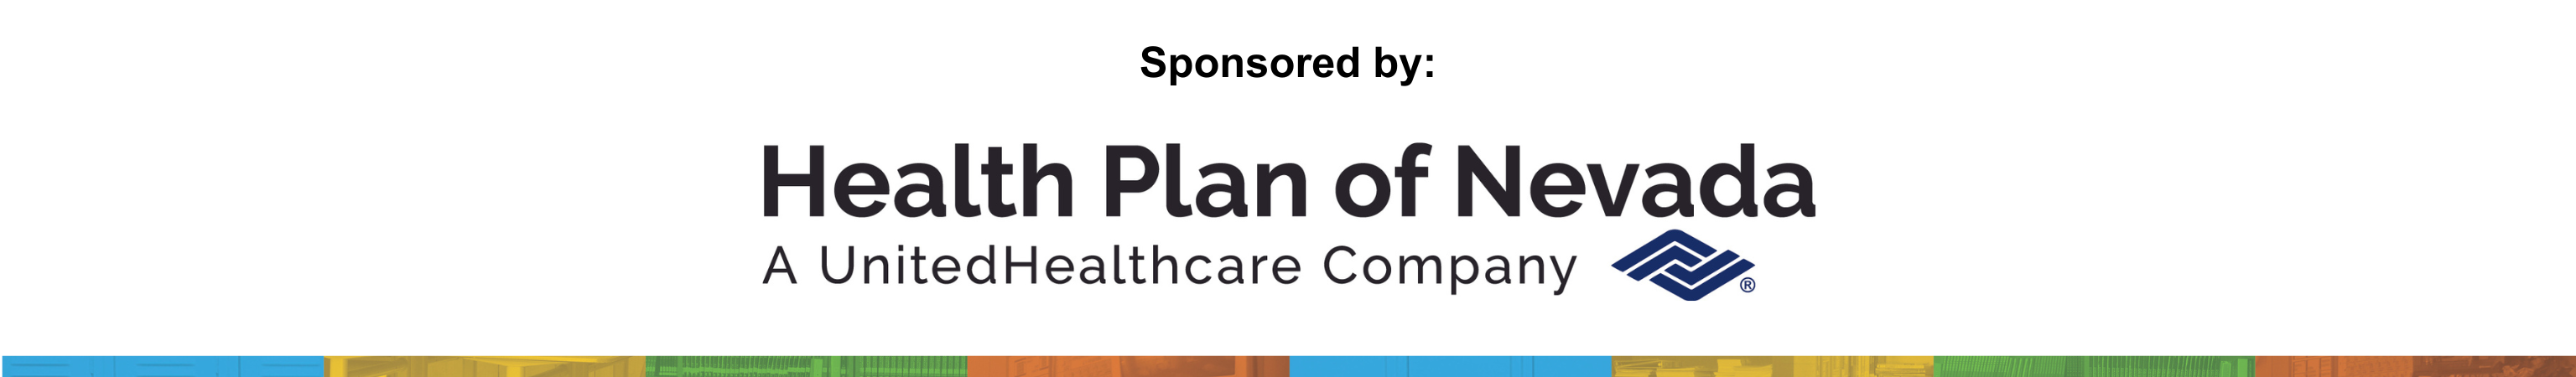 sponsored by Health Plan of Nevada